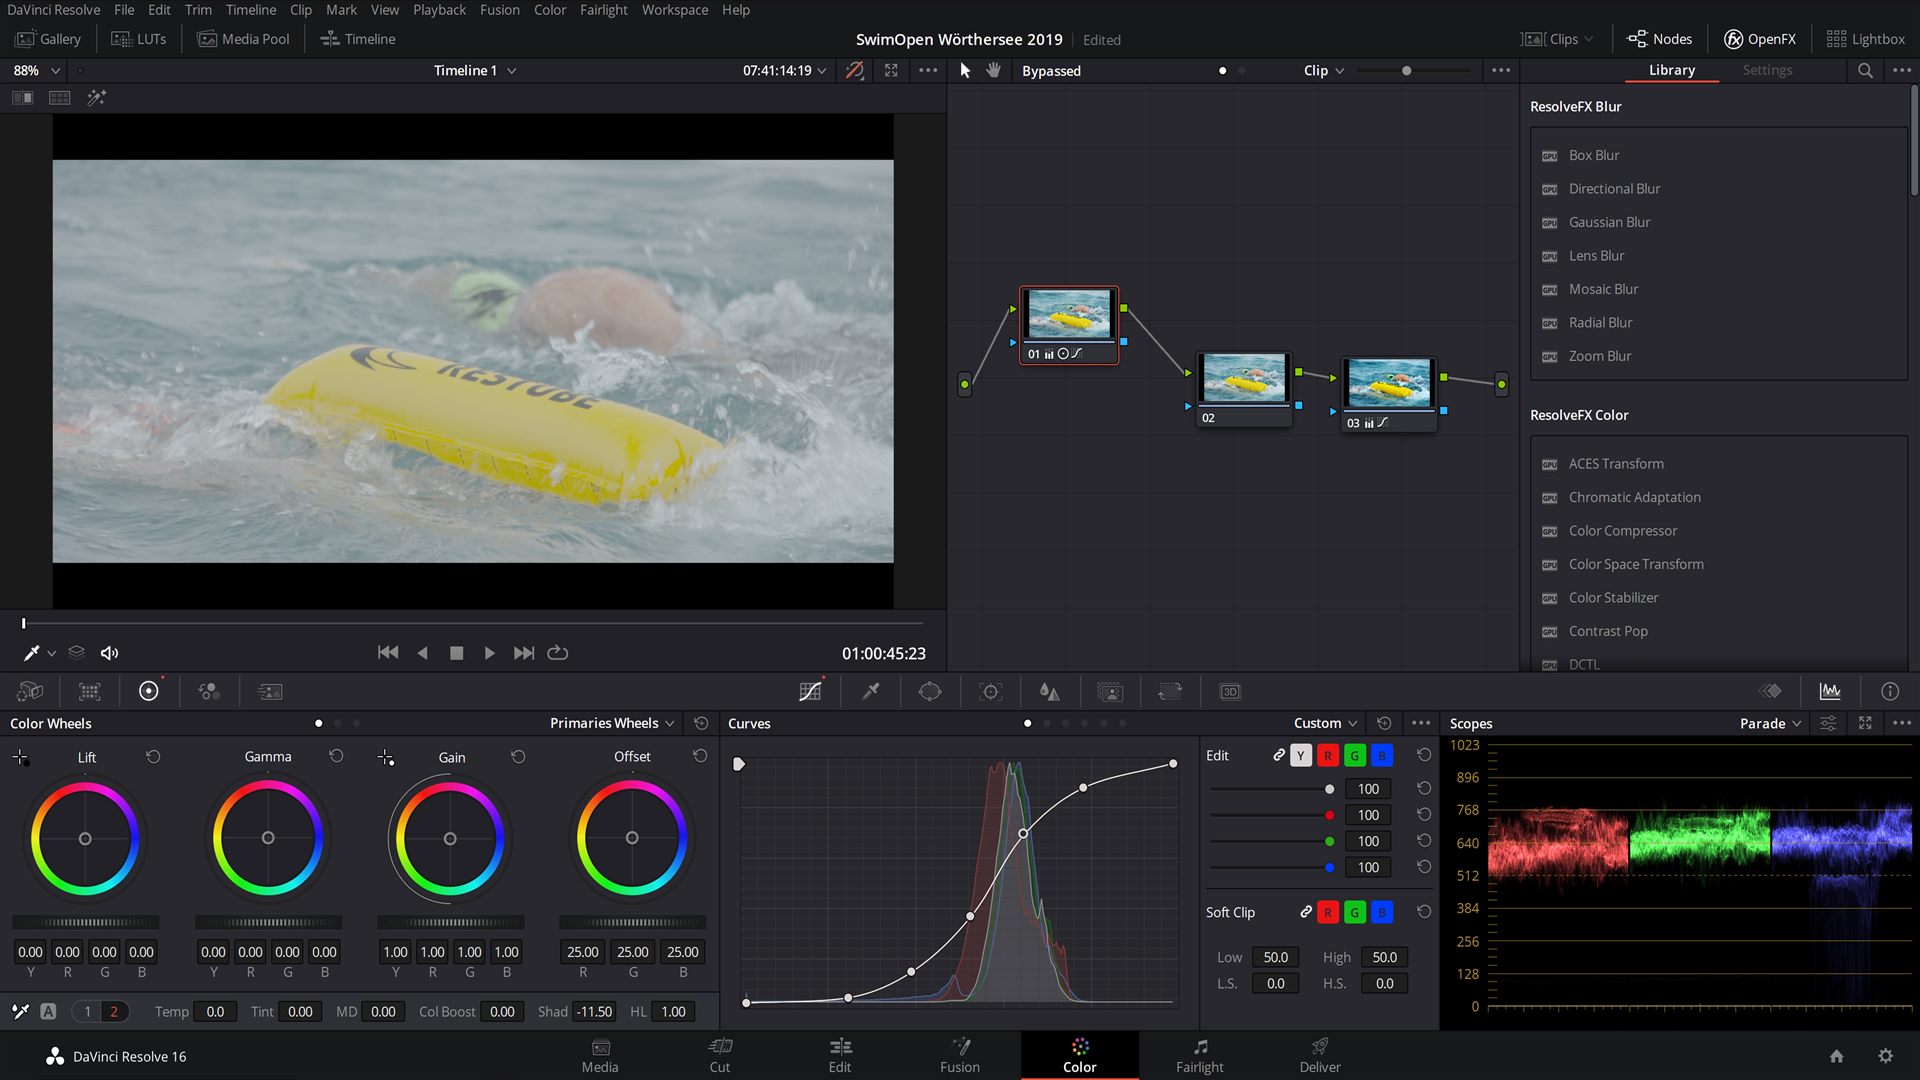 A screen shot of a video editing software featuring the Austria Swim Open.